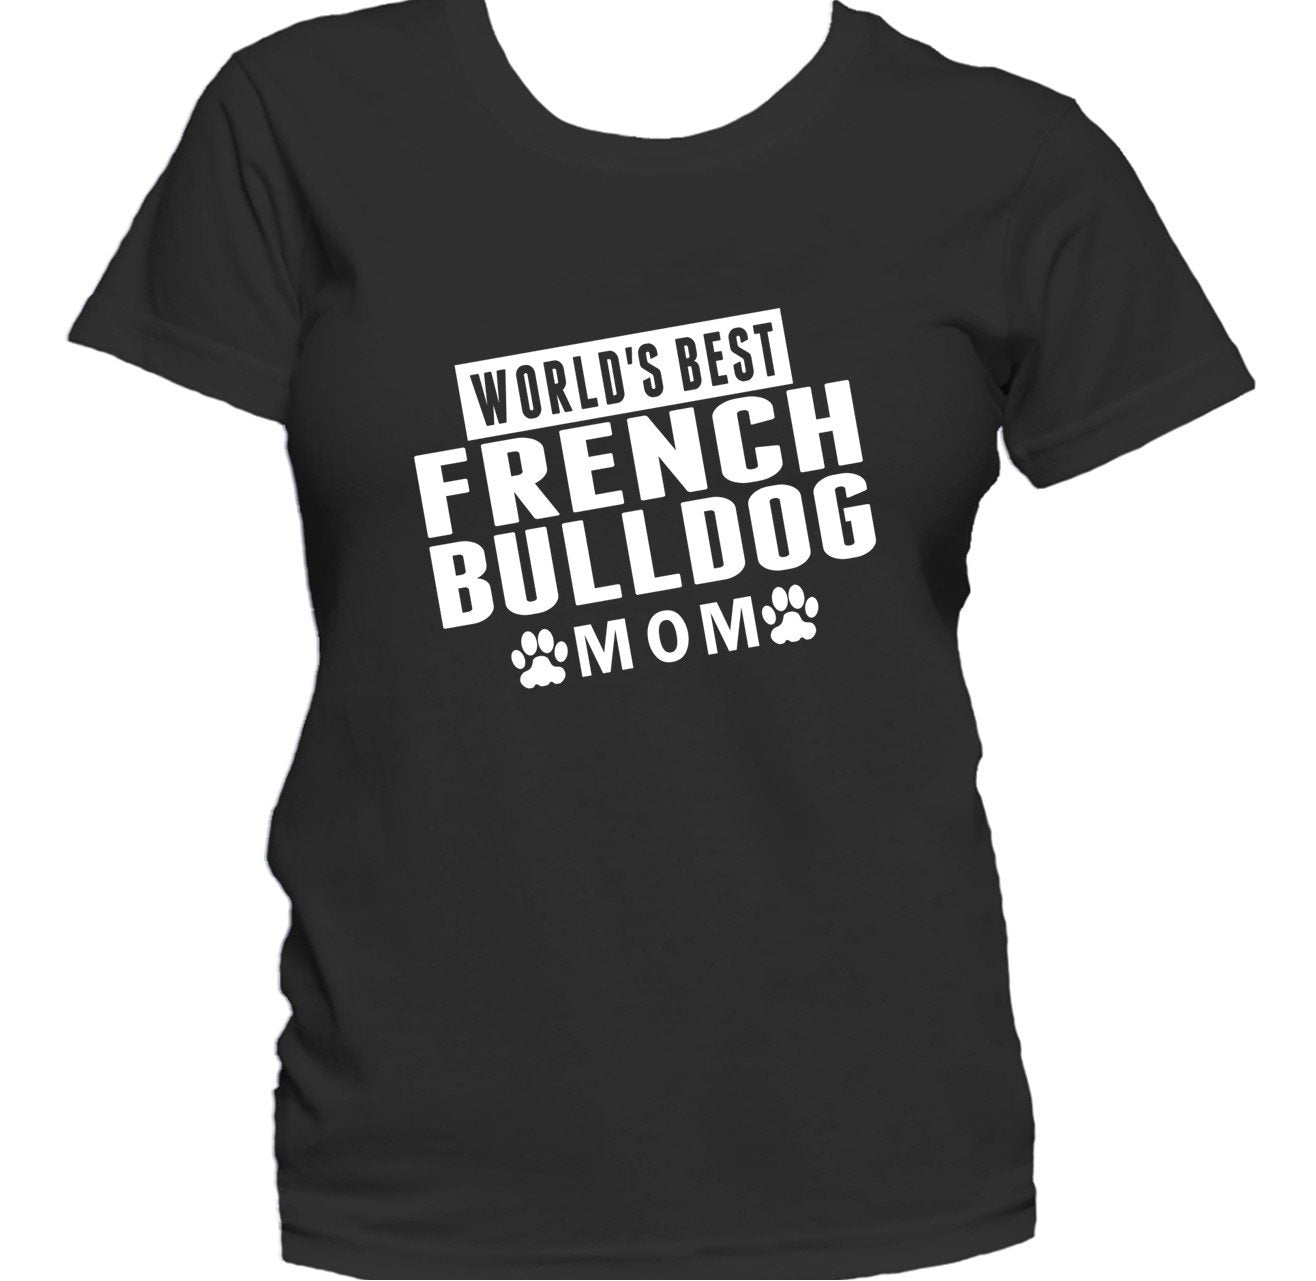 French Bulldog Mom Shirt - World's Best French Bulldog Mom Women's T-Shirt